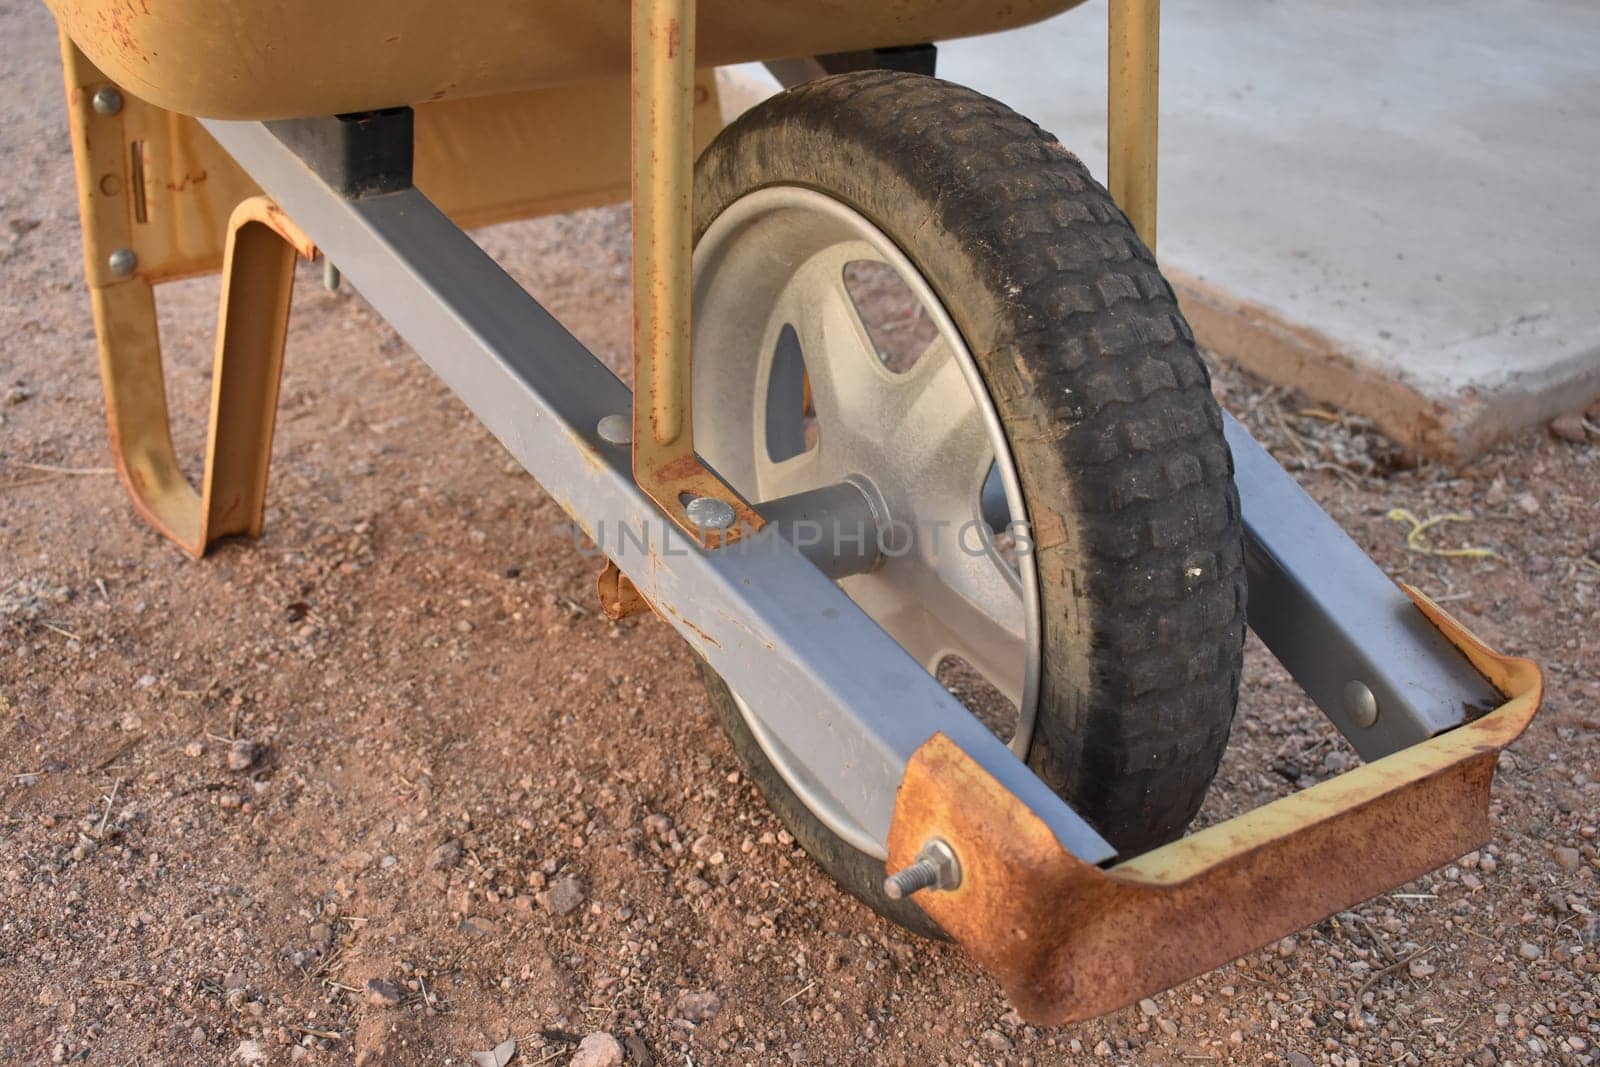 Wheel on Bottom of Orange Wheelbarrow on Dirt Ground. High quality photo